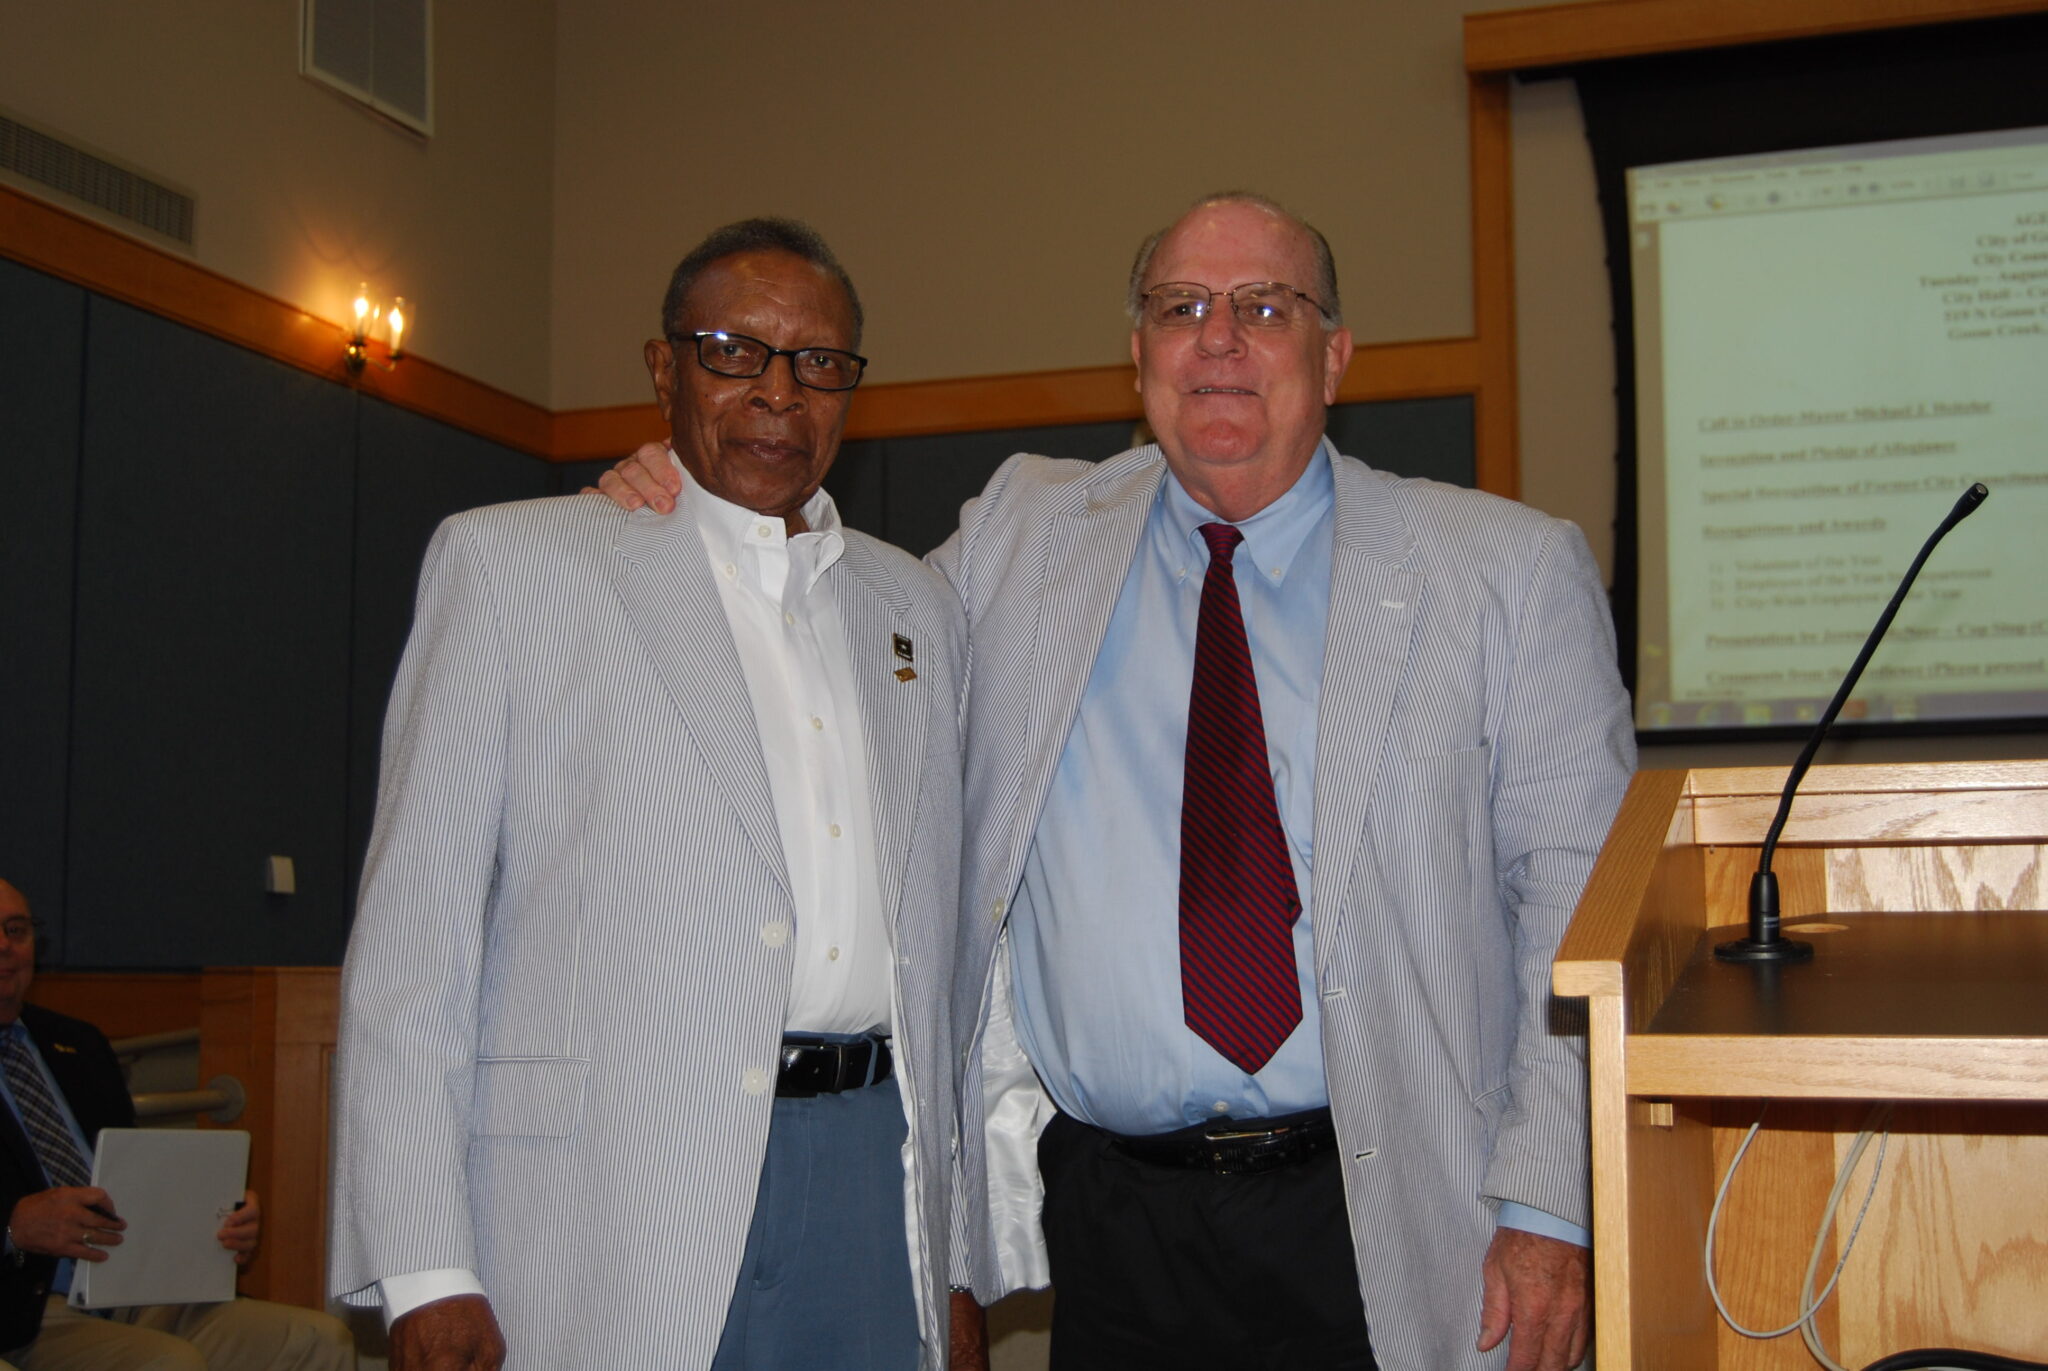 Pictured: John McCants and Mayor Michael Heitzler